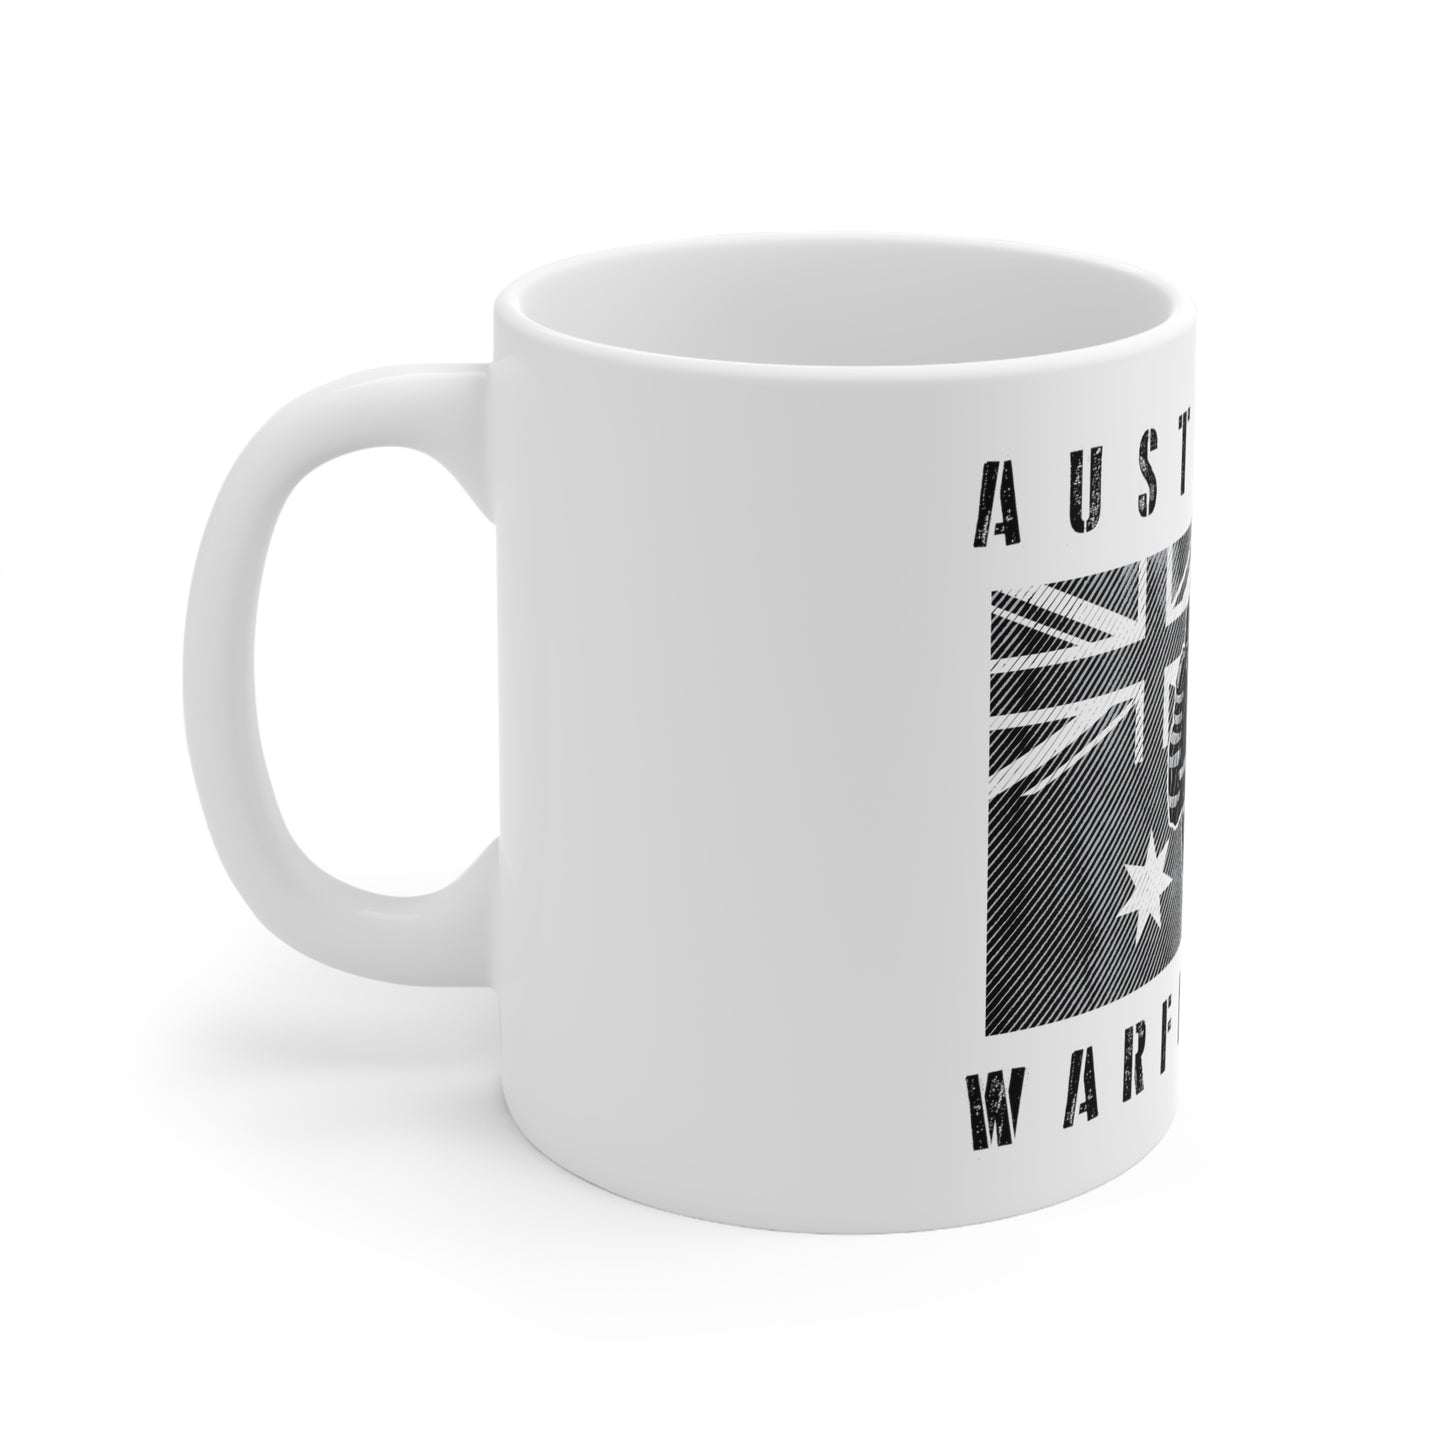 AUSTRALIAN WARFIGHTERS 11oz